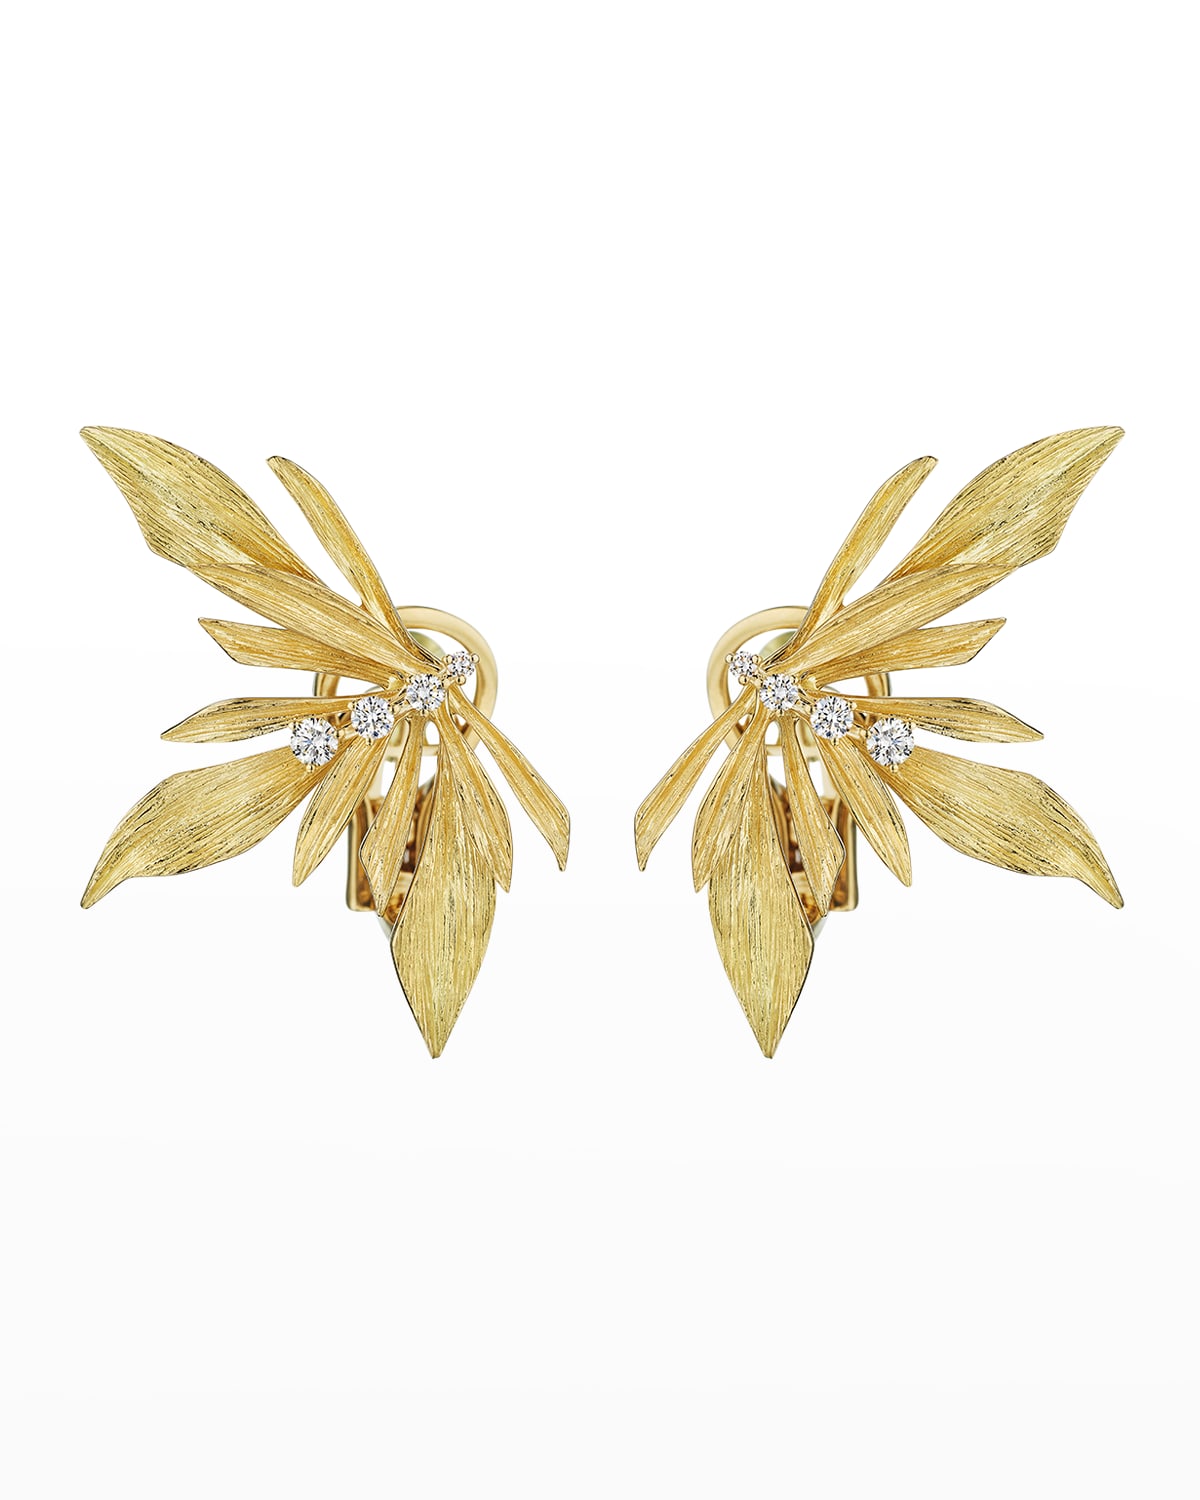 18K Bahia Yellow Gold Flower Earrings with VS-GH Diamonds